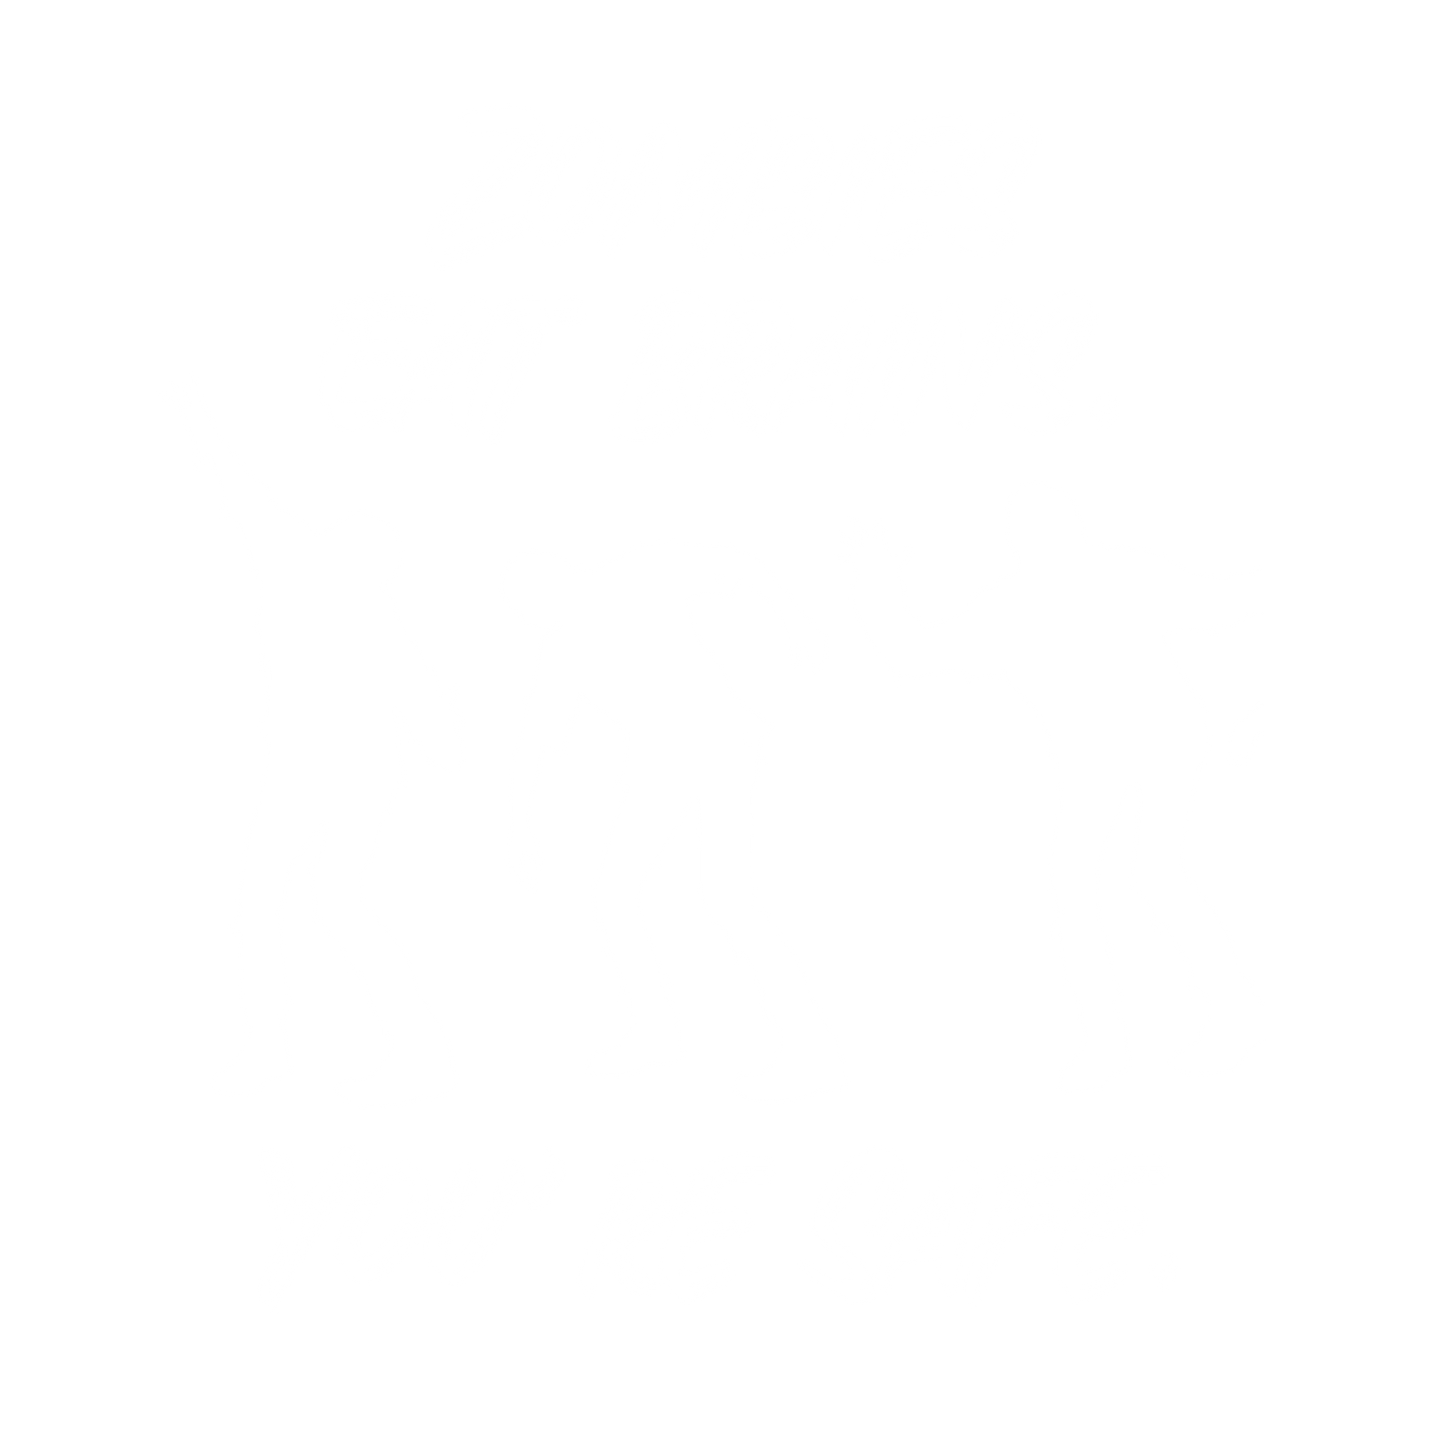 Zombie eat brains